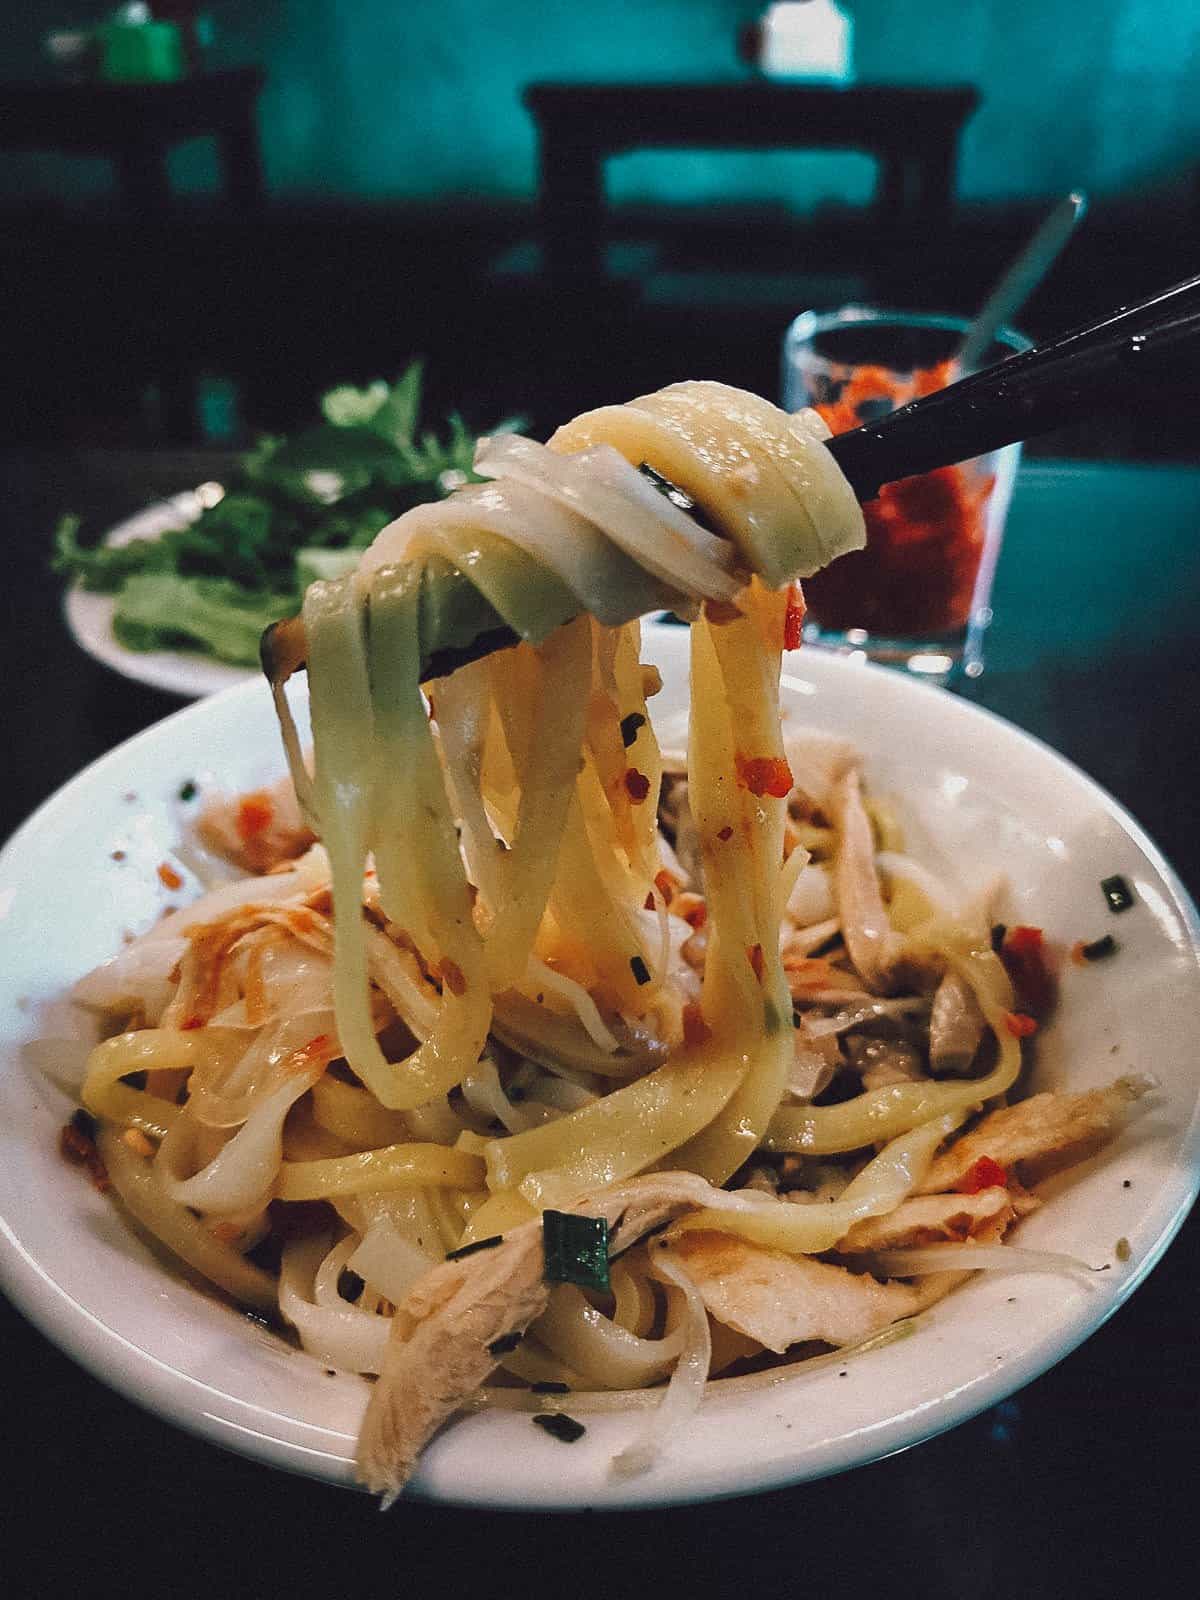 Mi quang noodles at Pho Xua restaurant in Hoi An